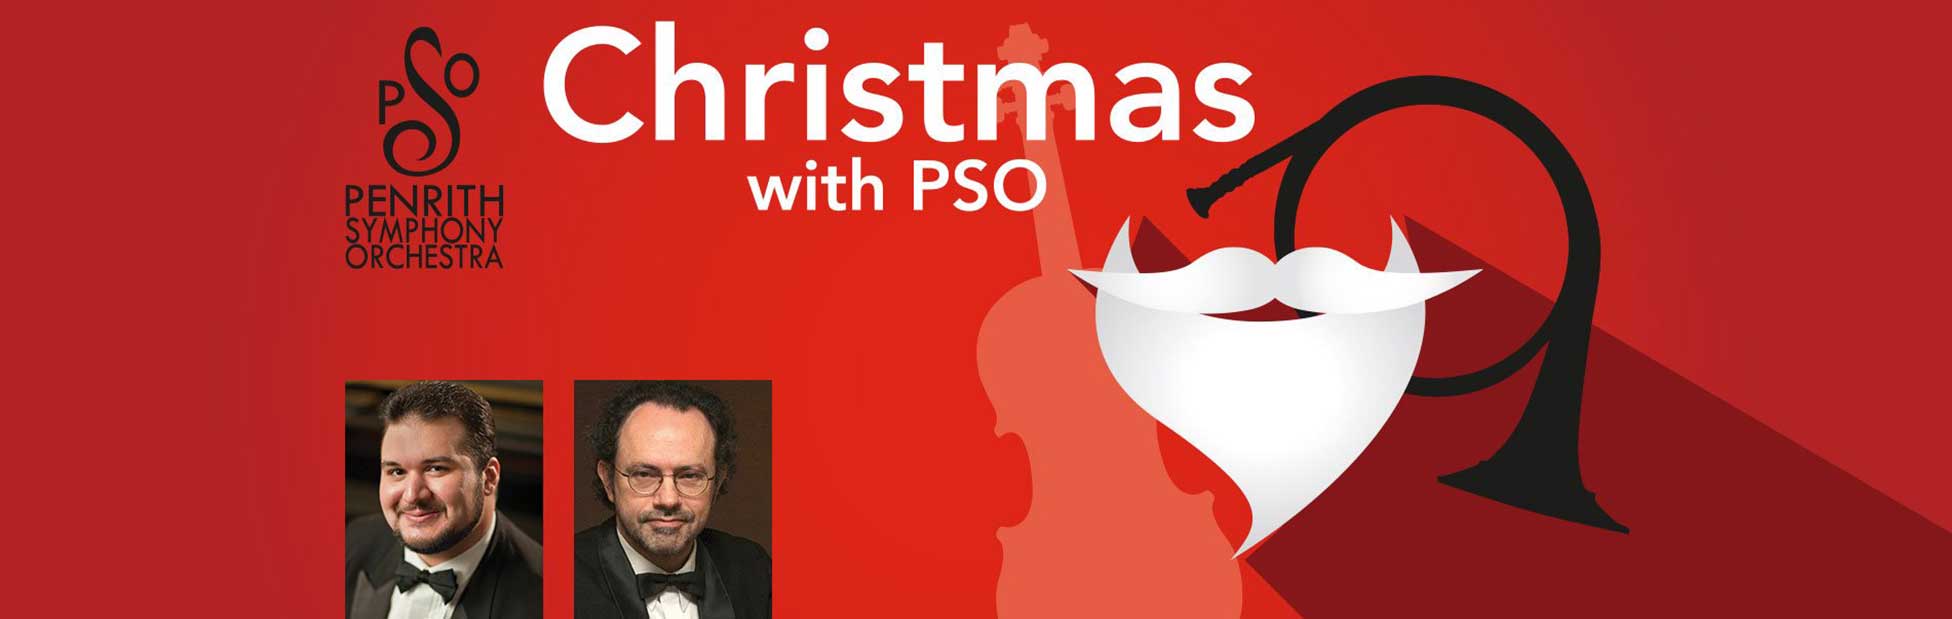 PSO promotion image